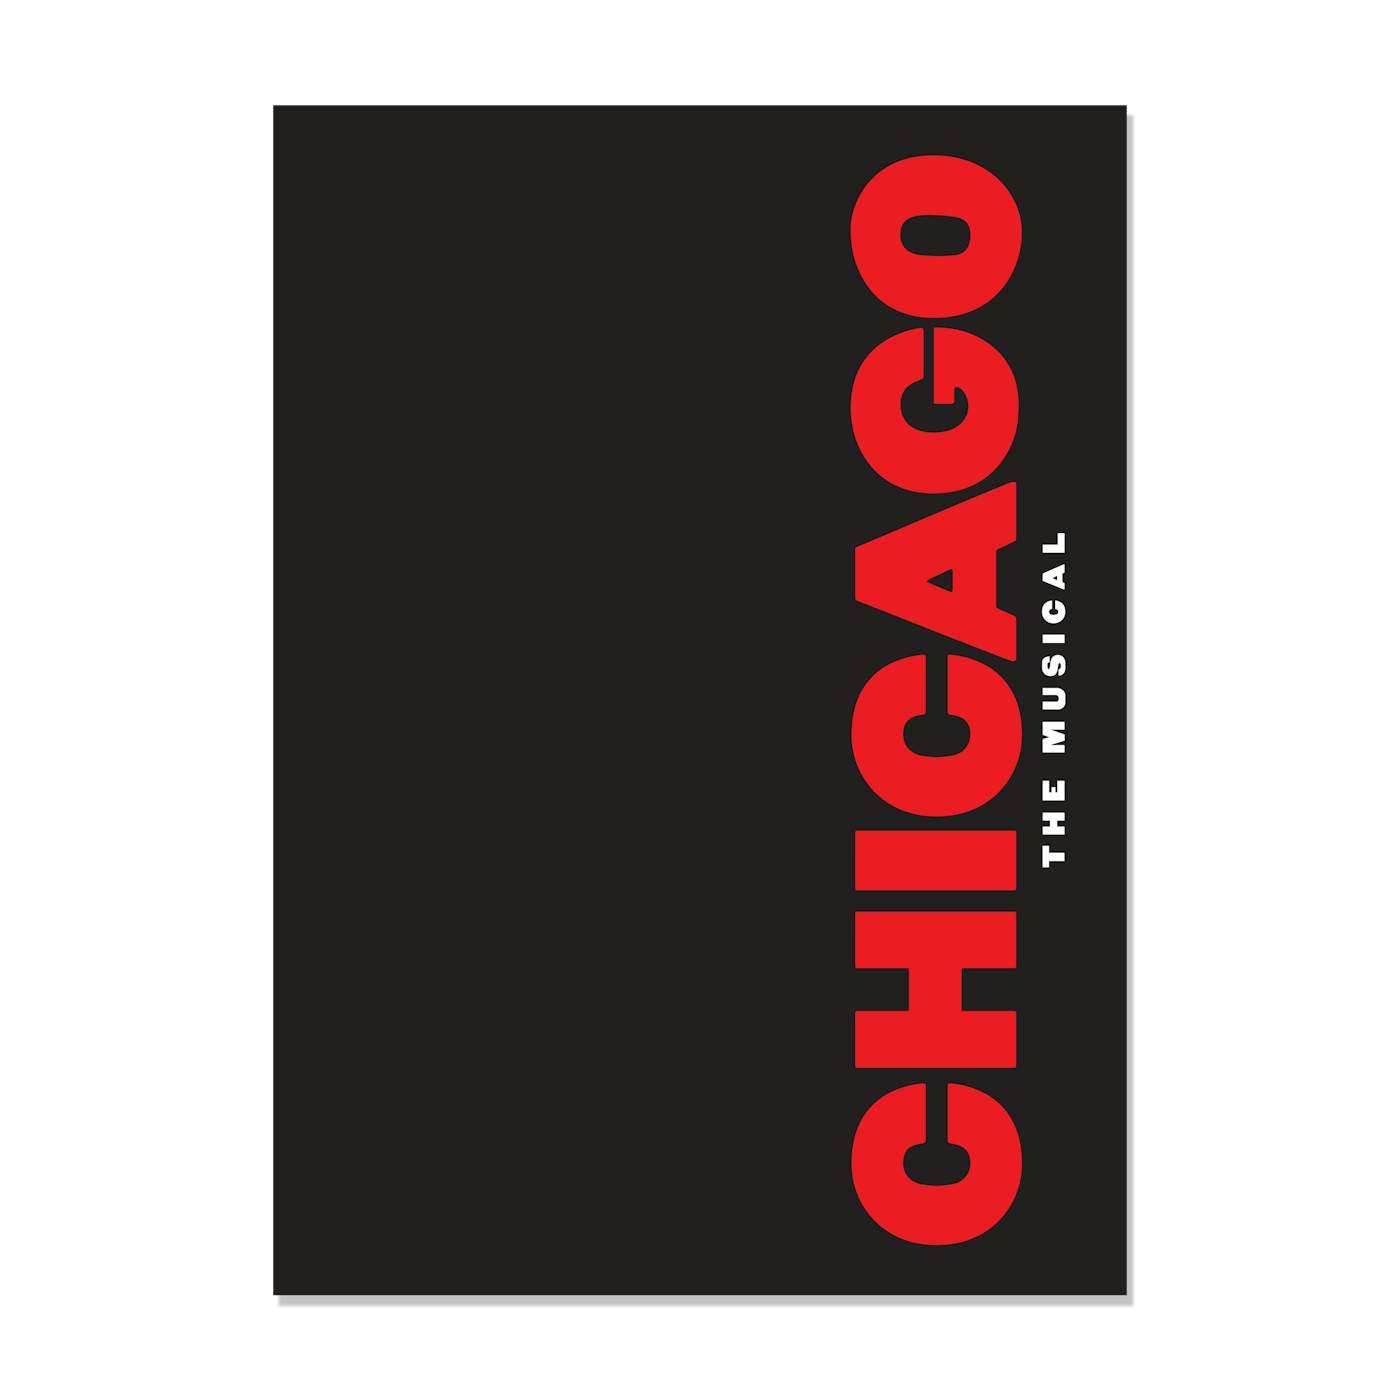 Chicago The Musical CHICAGO Souvenir Program Book